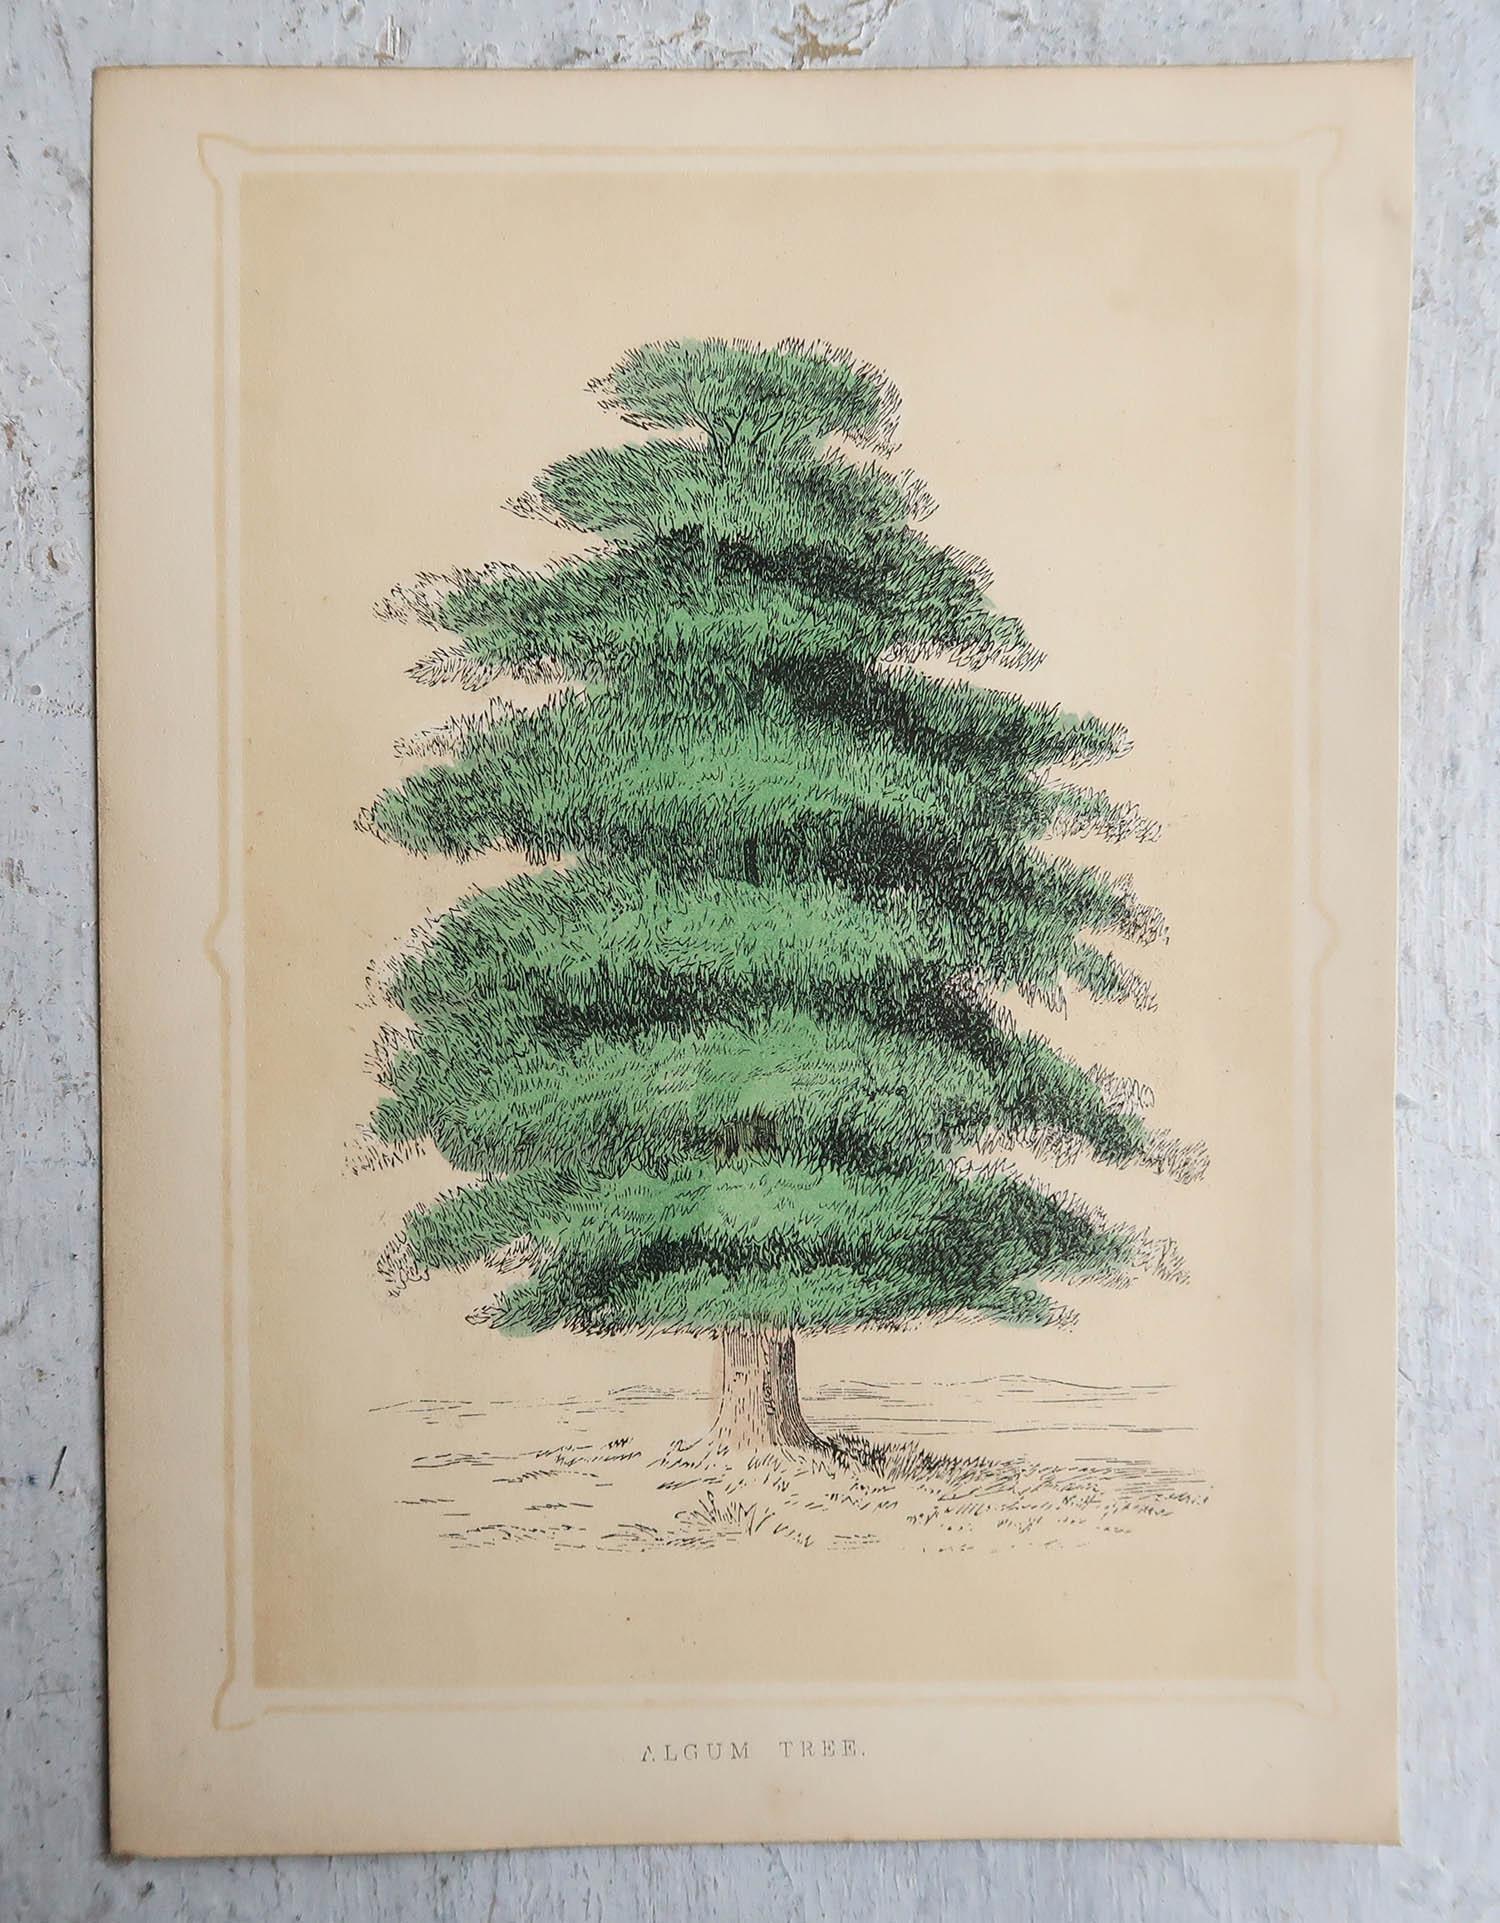 Paper Set of 12 Original Antique Prints of Trees, circa 1850